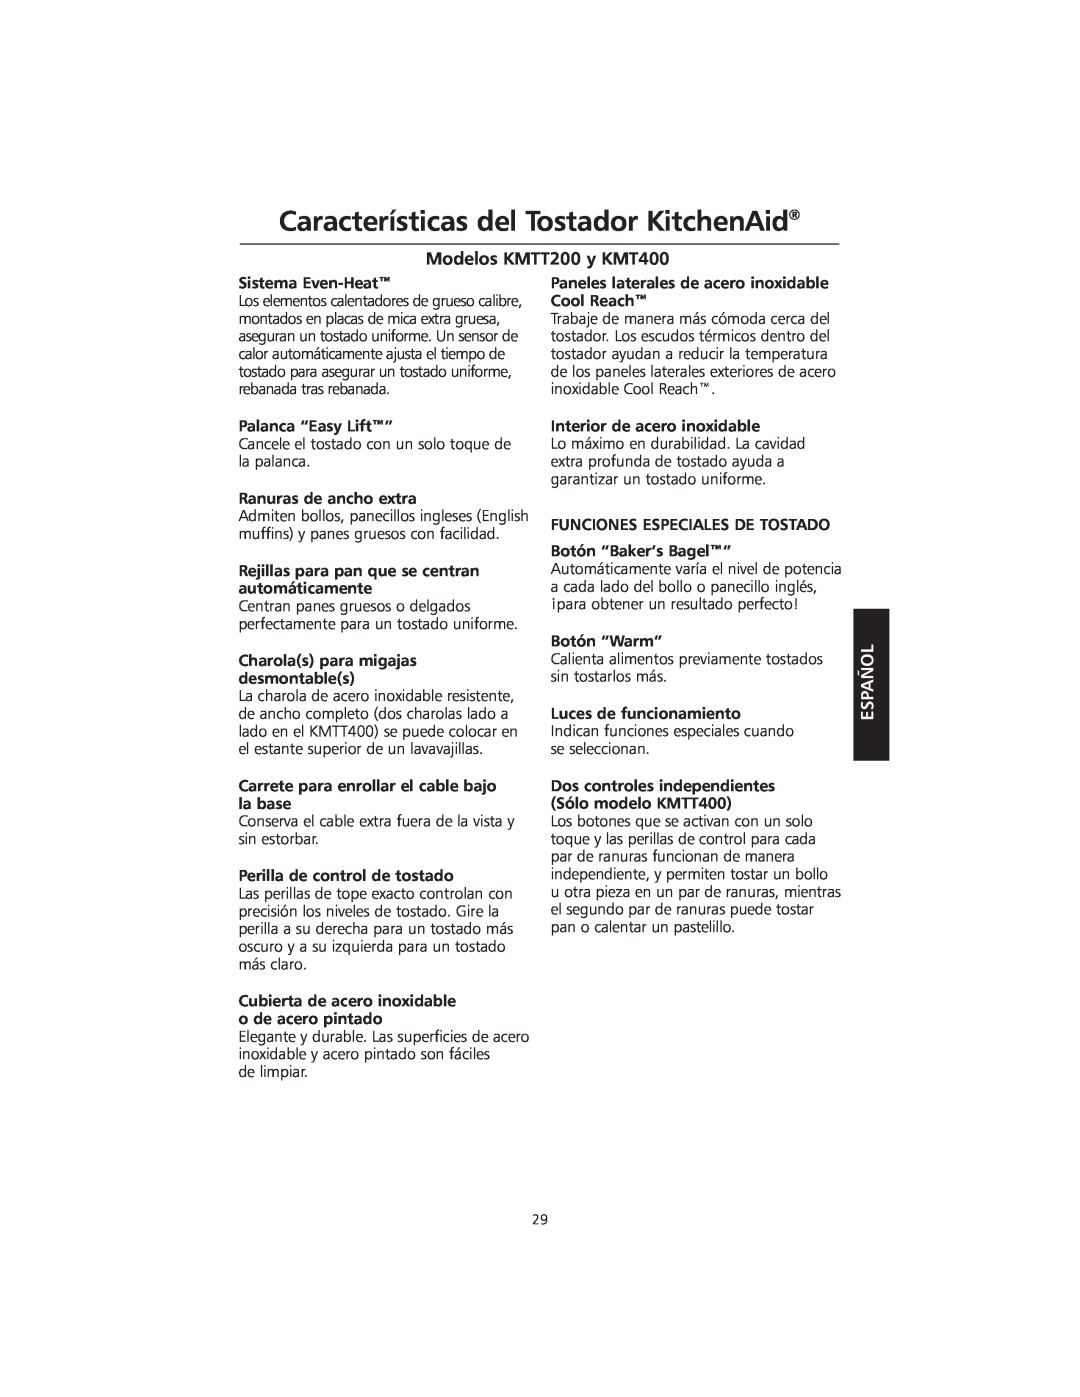 KitchenAid manual Características del Tostador KitchenAid, Modelos KMTT200 y KMT400, Español, de limpiar 